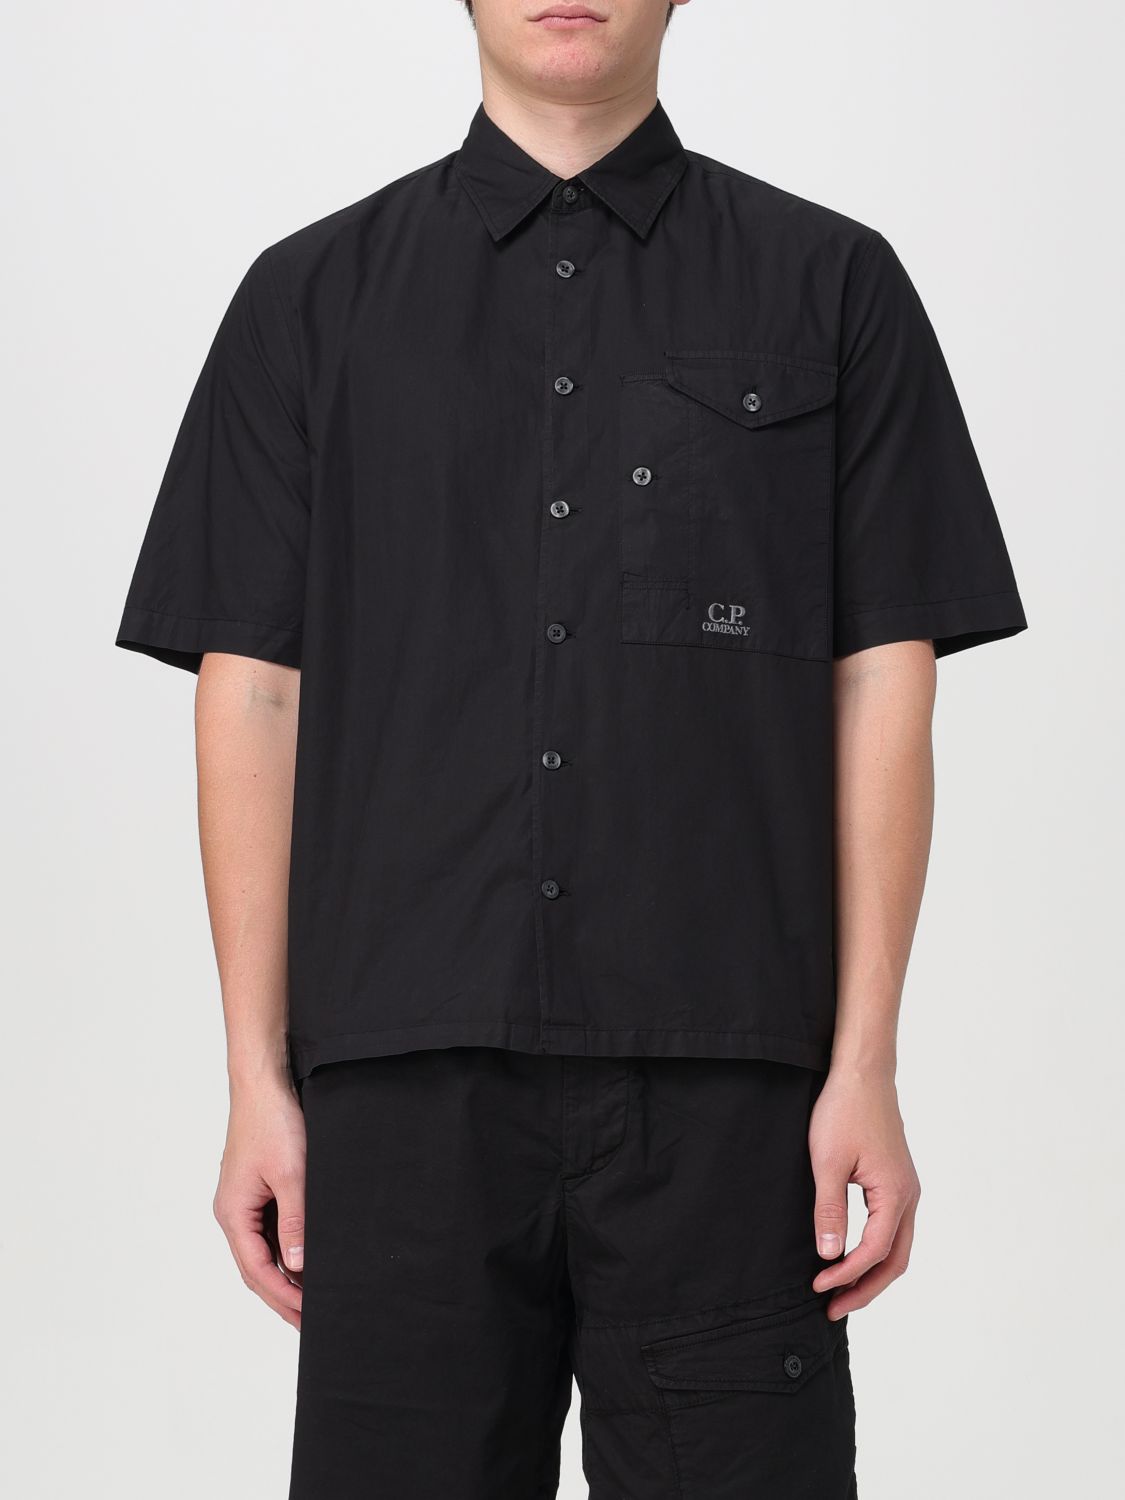 C.P. Company Shirt C. P. COMPANY Men color Black